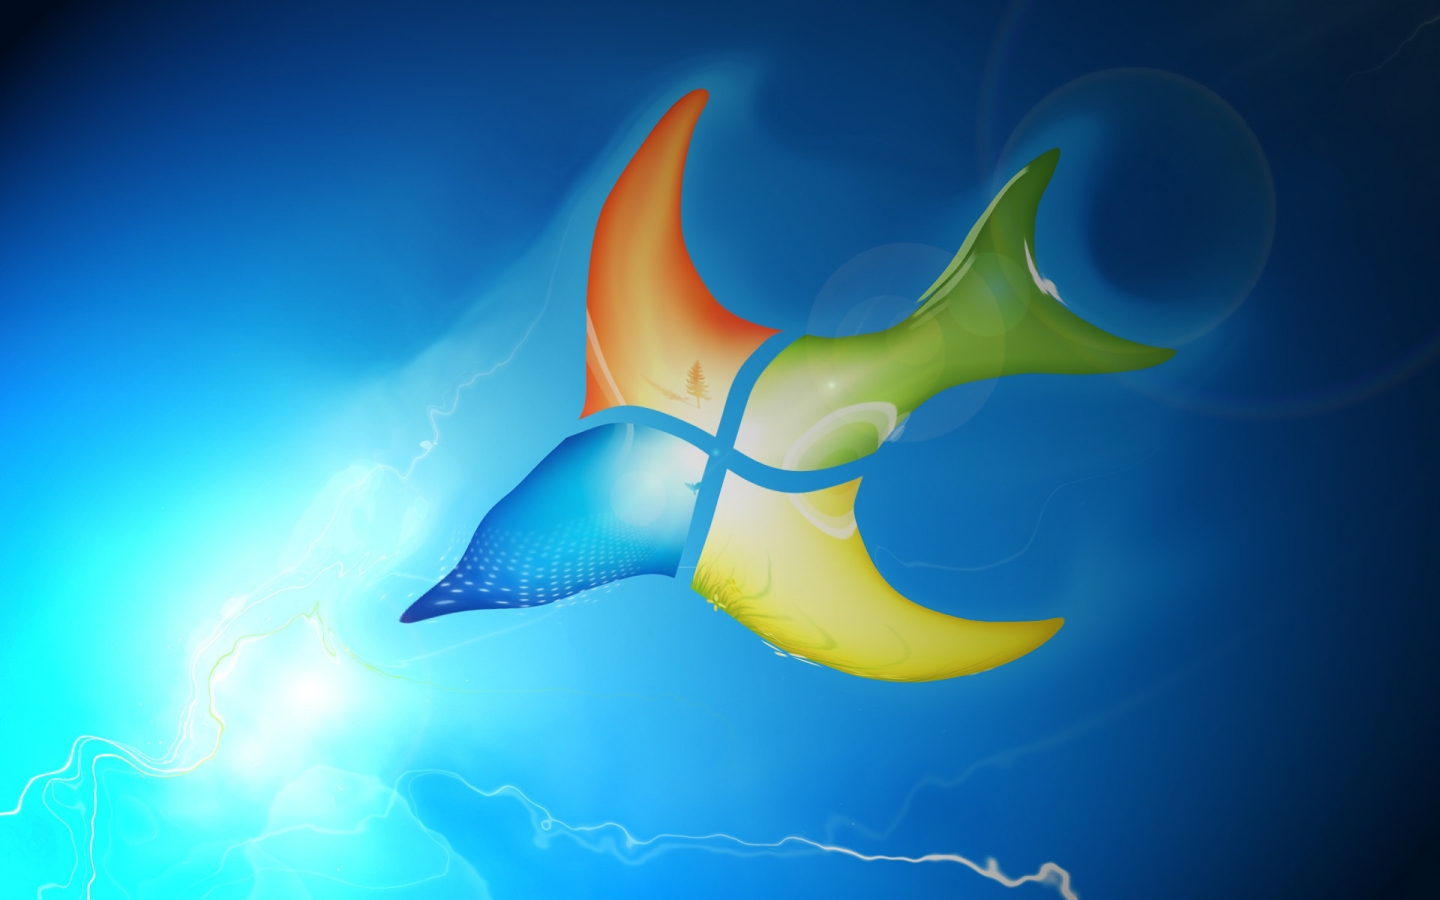 Windows Bird Logo for 1440 x 900 widescreen resolution